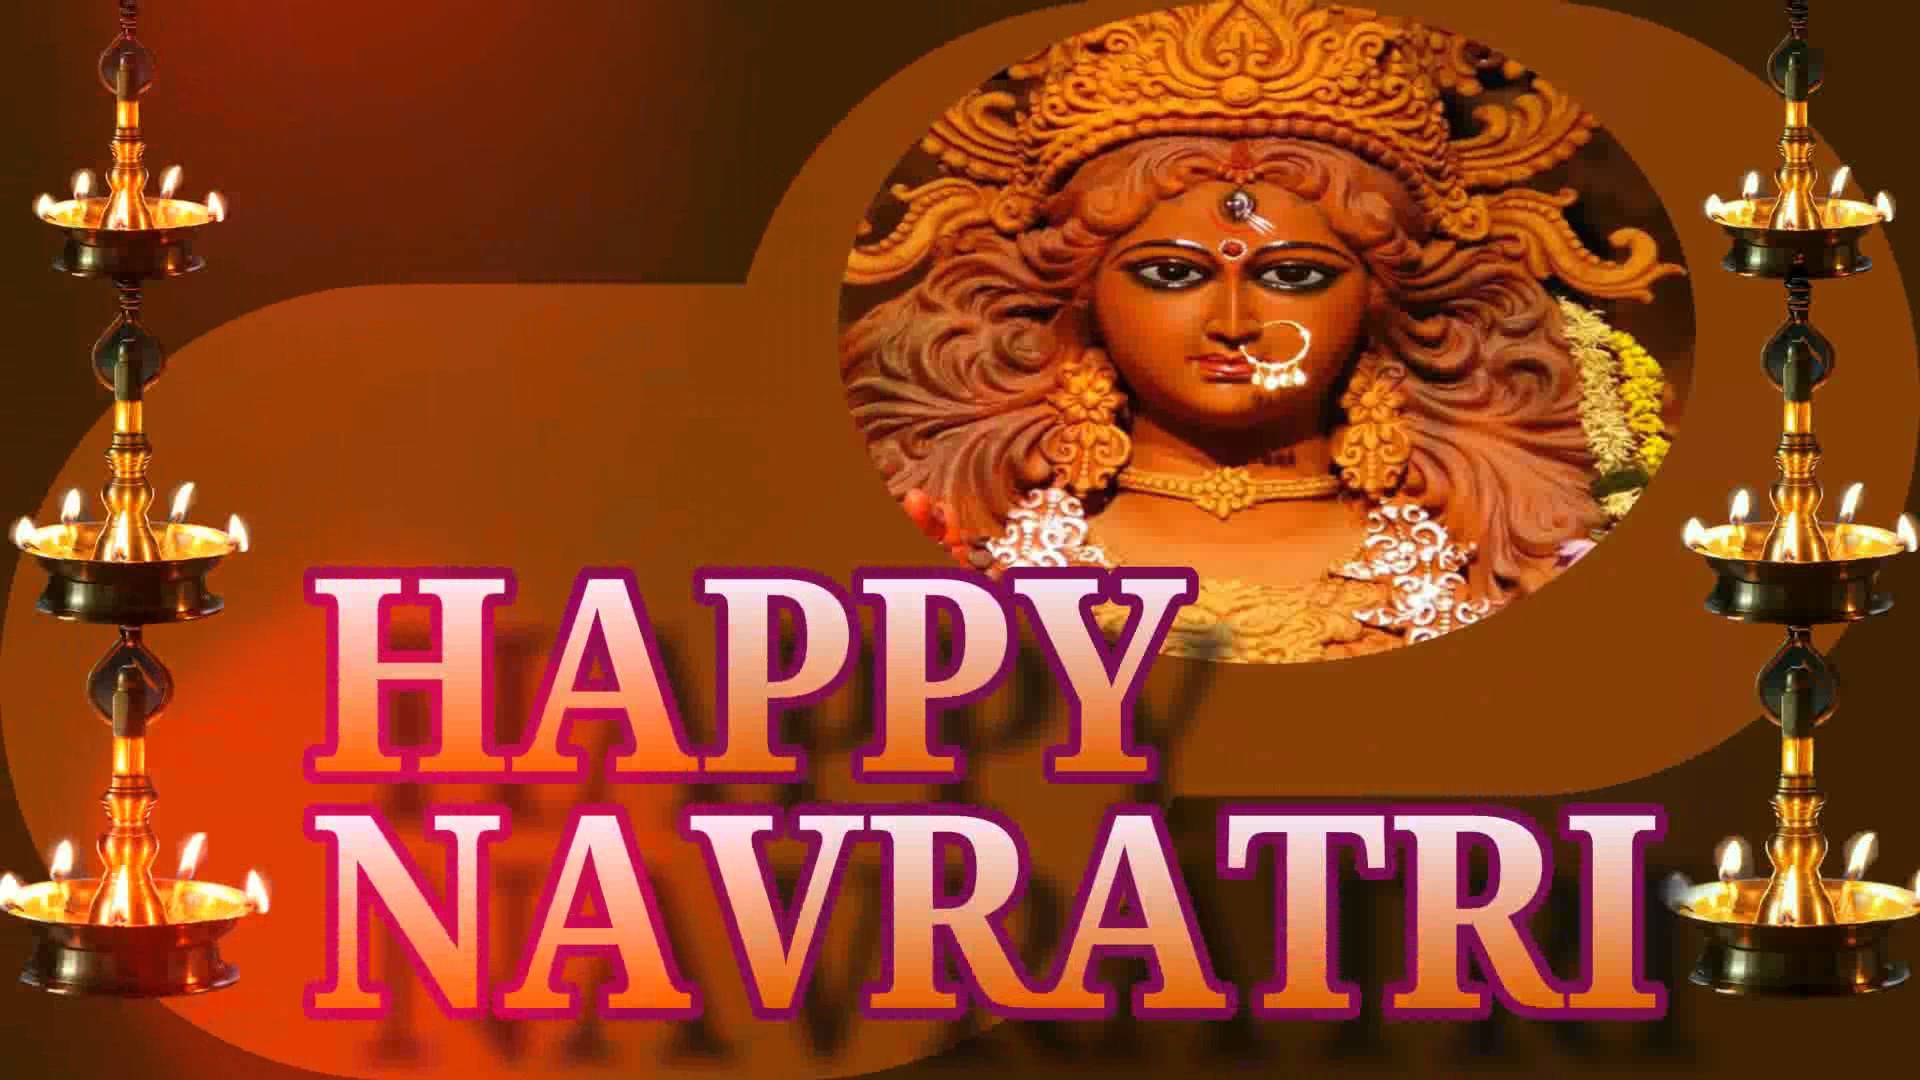 Happy Navratri 2017: Navratri Messages, Sayings, Wallpaper to